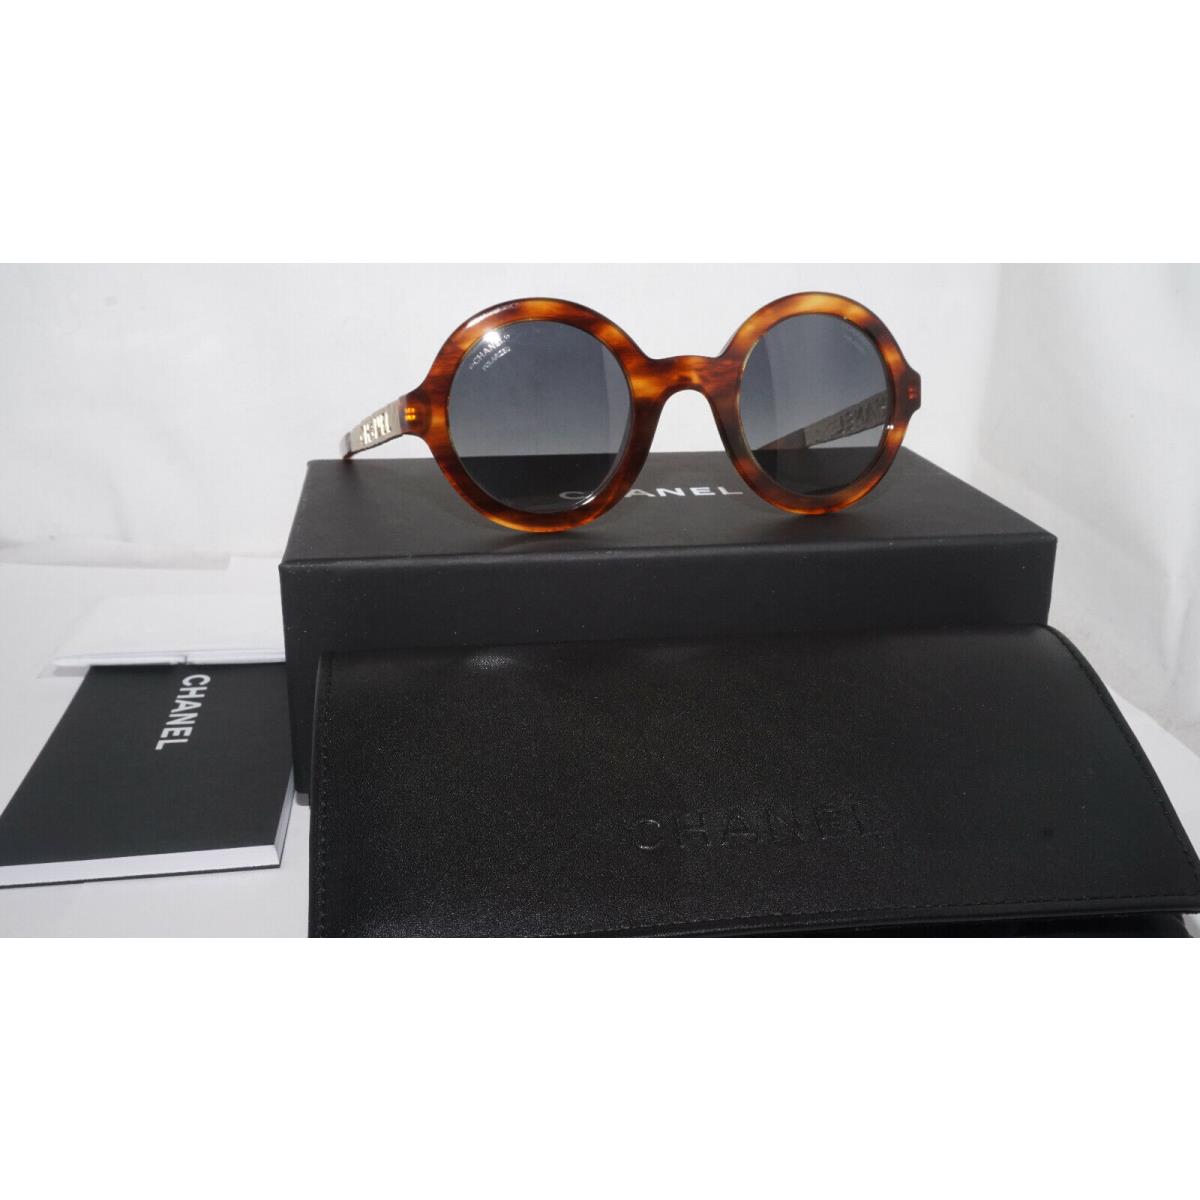 Chanel Sunglasses Round Tortoise Grey Polarized 5441 C.1077/S8 46 26 140